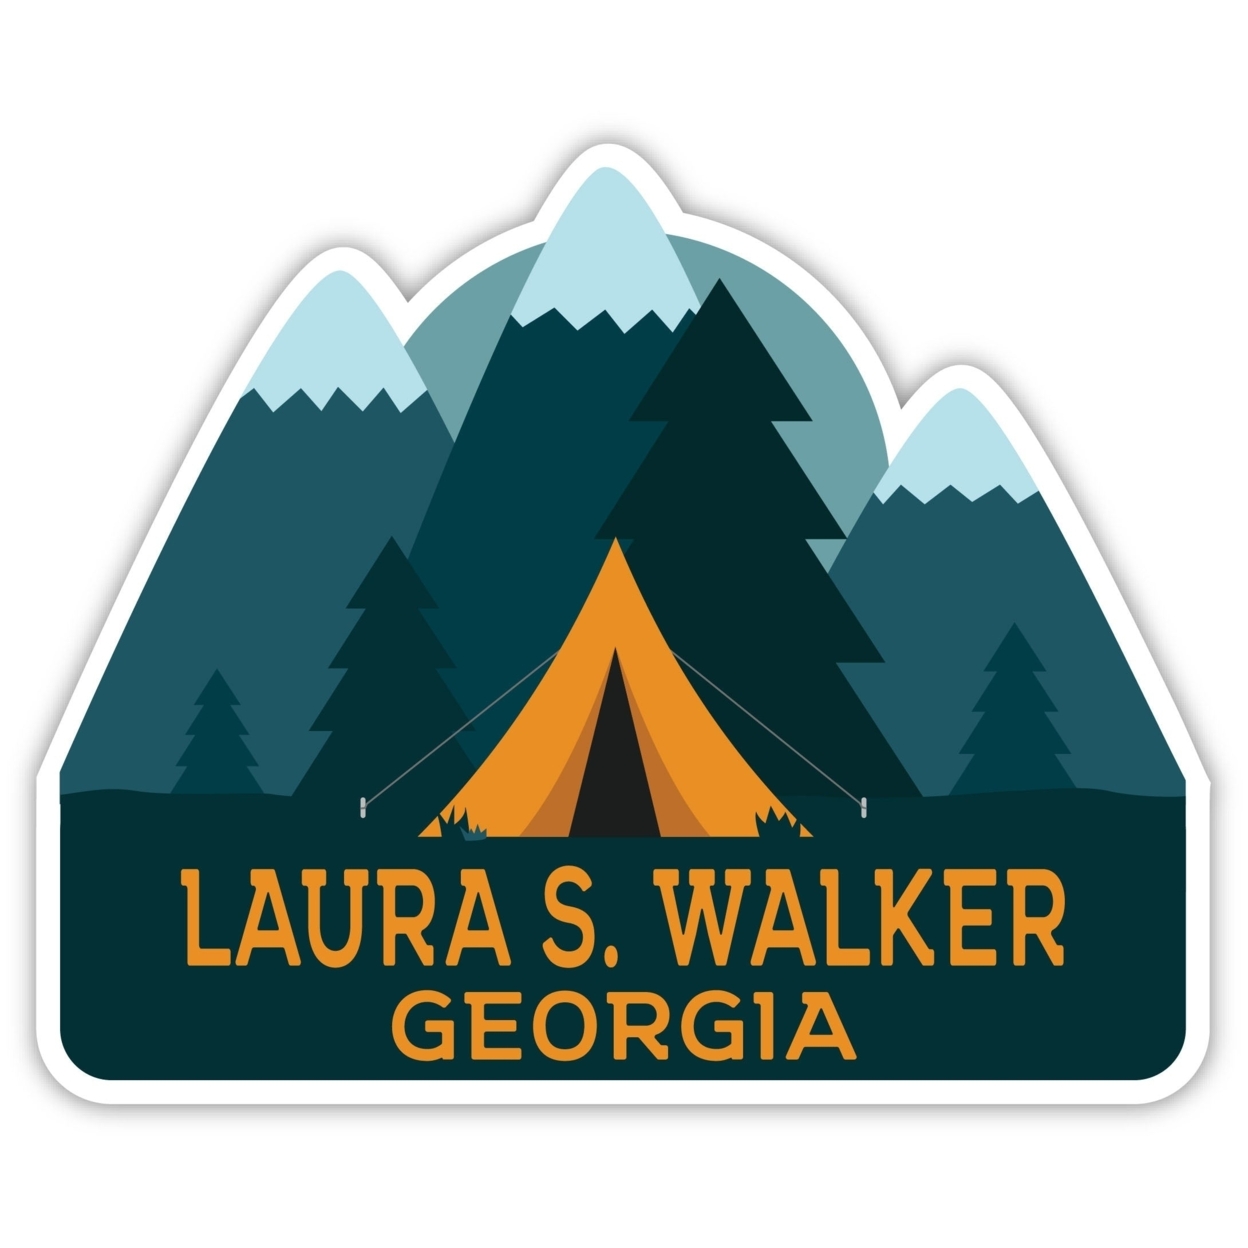 Laura S. Walker Georgia Souvenir Decorative Stickers (Choose Theme And Size) - 2-Inch, Tent